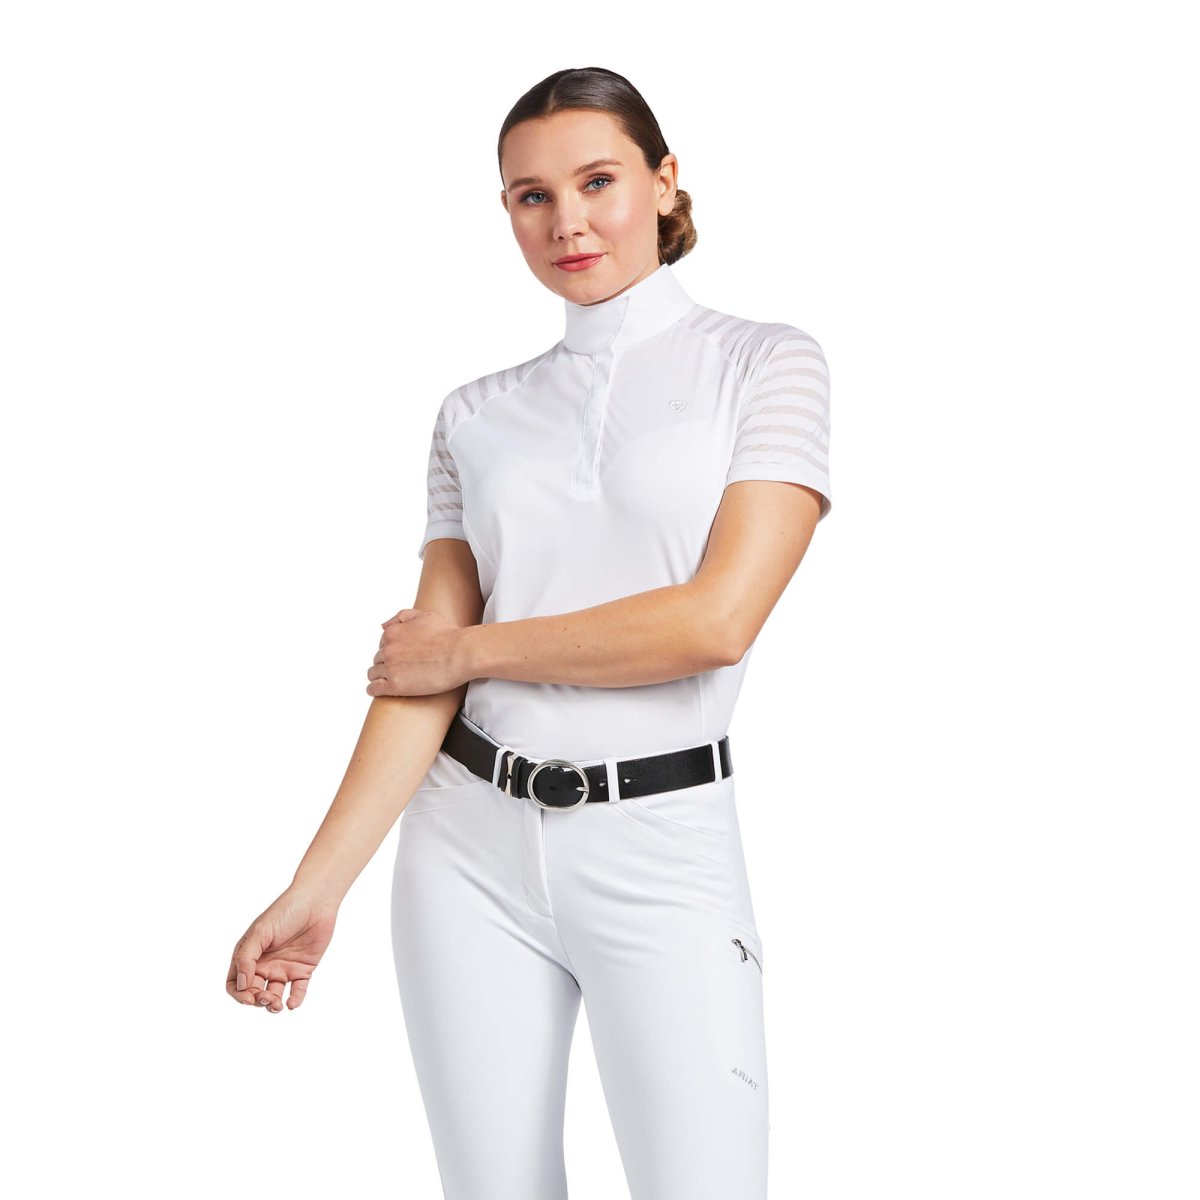 Ariat Womens Aptos Vent Short Sleeve Show Shirt - White - Large